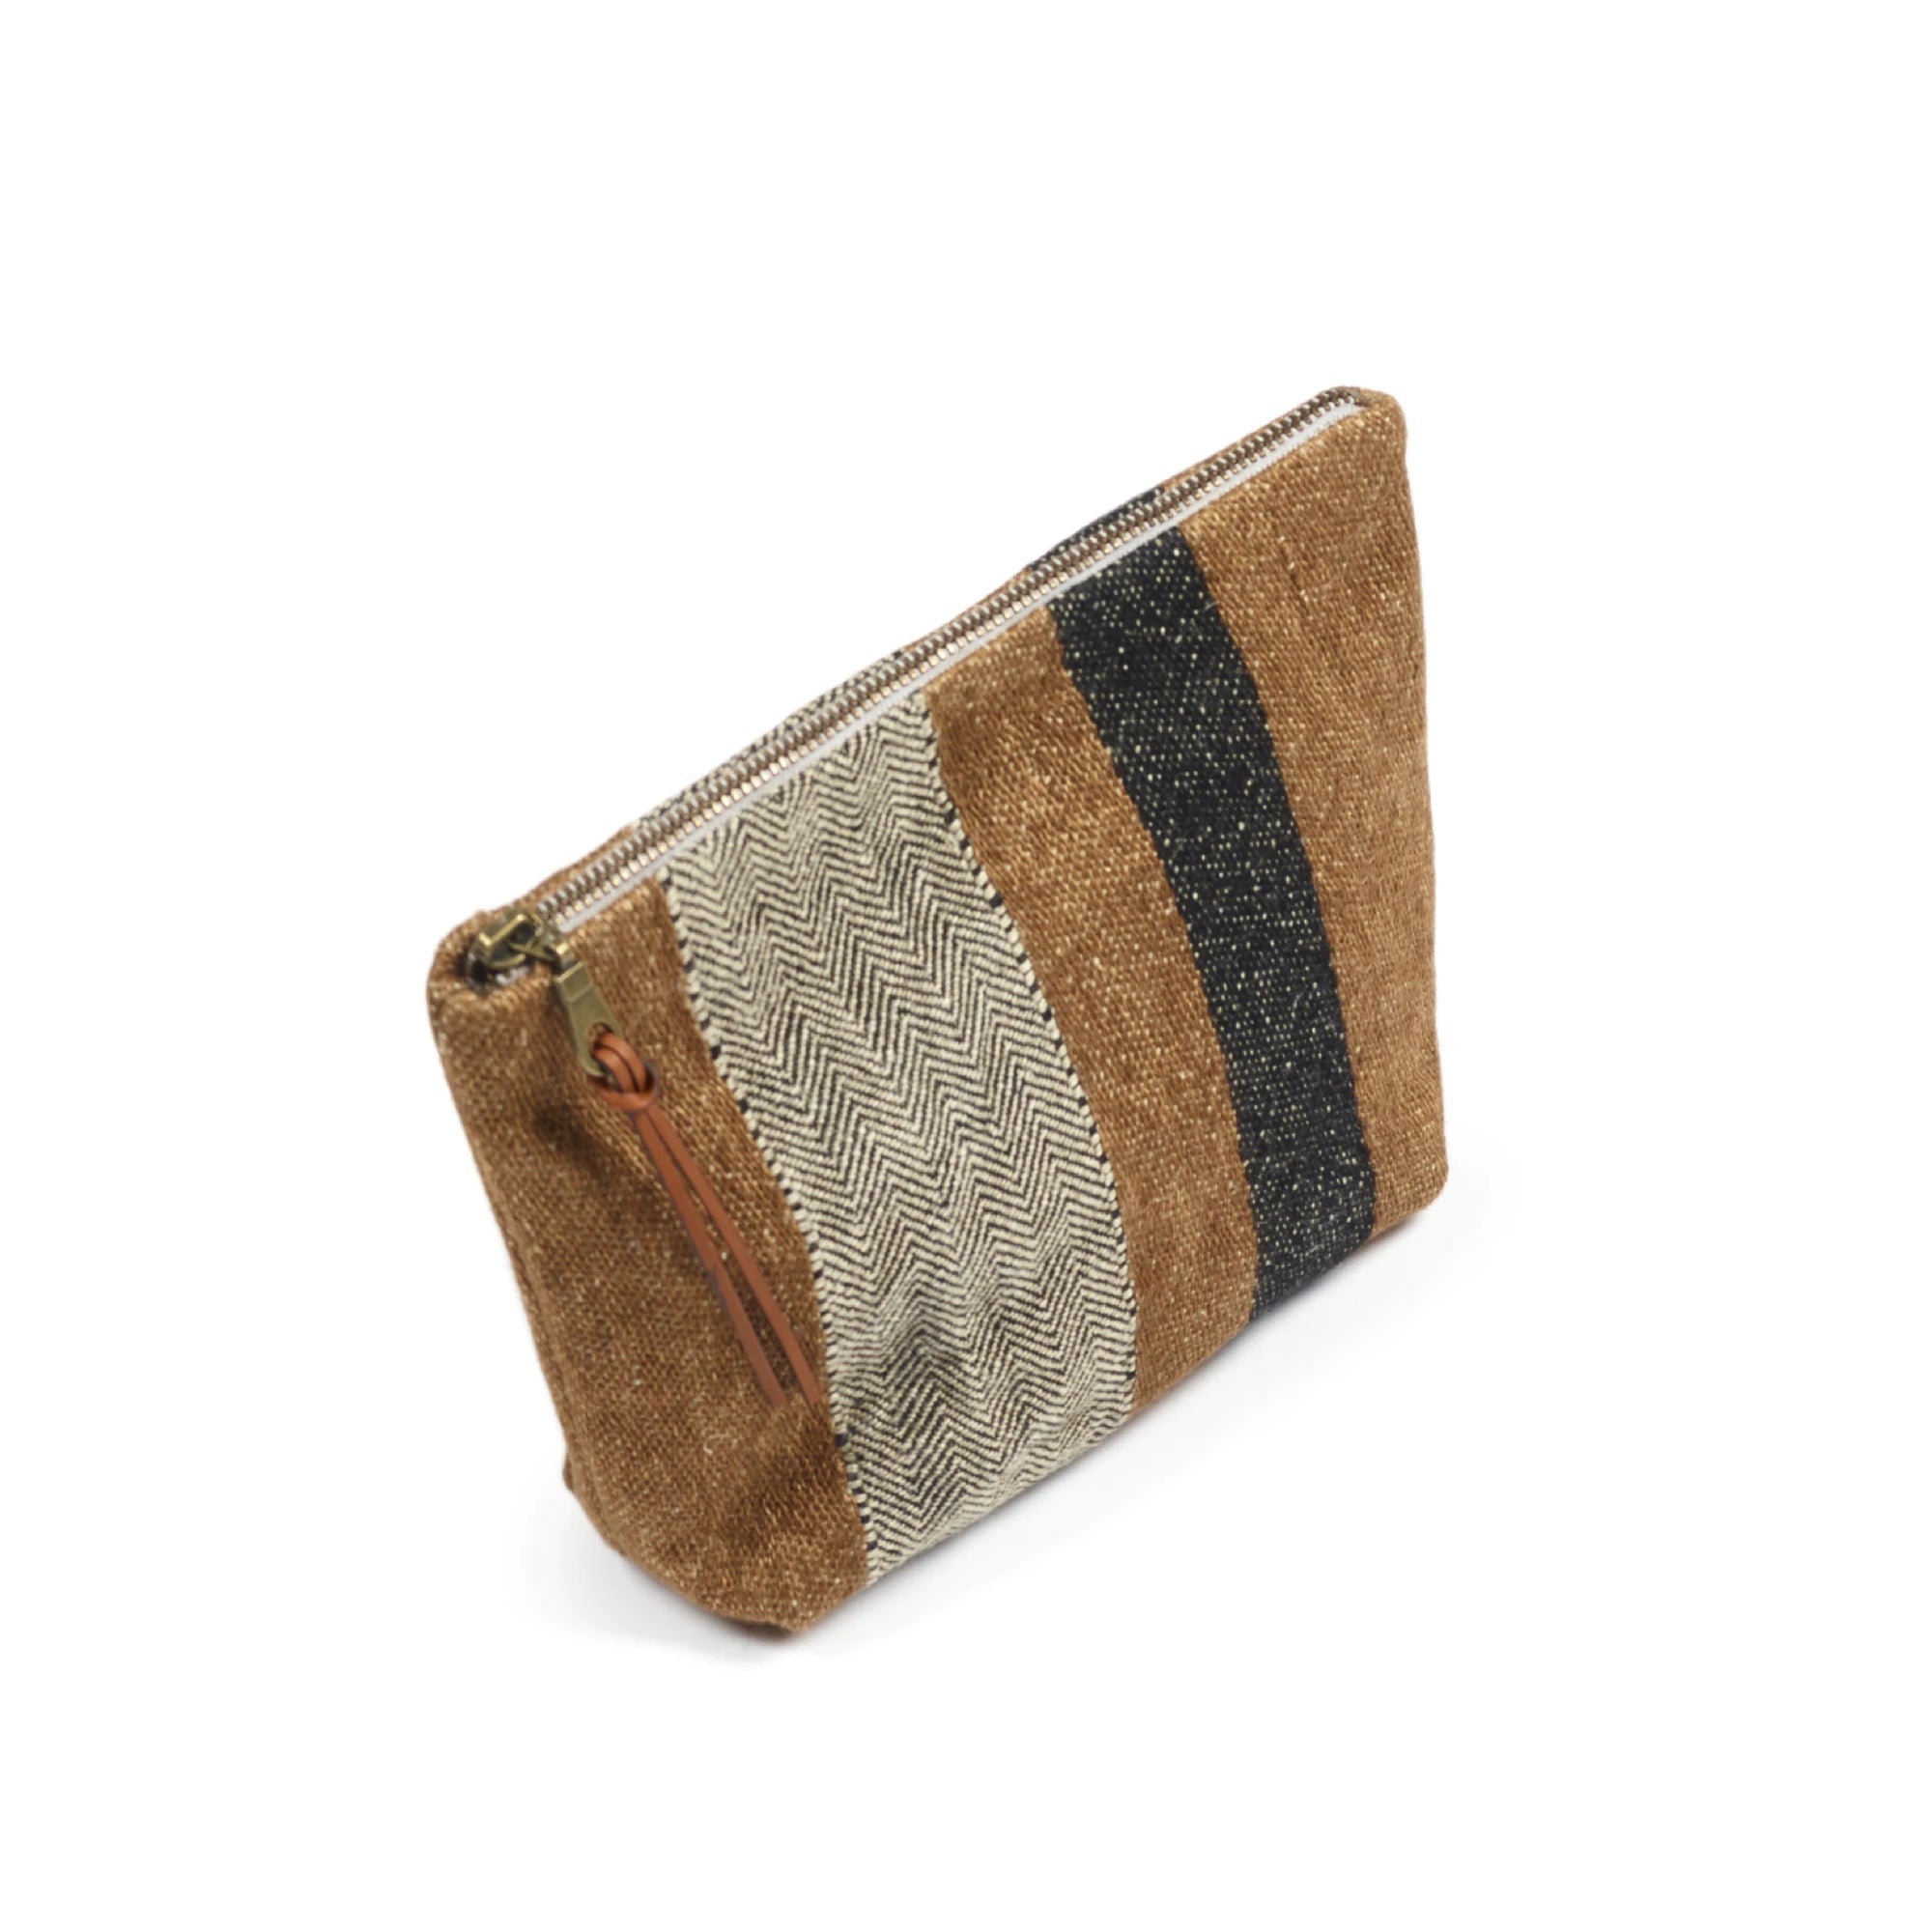 Libeco 'Pouch' små håndtasker i hør, 16x23 cm_9 by Rune-Jakobsen Design